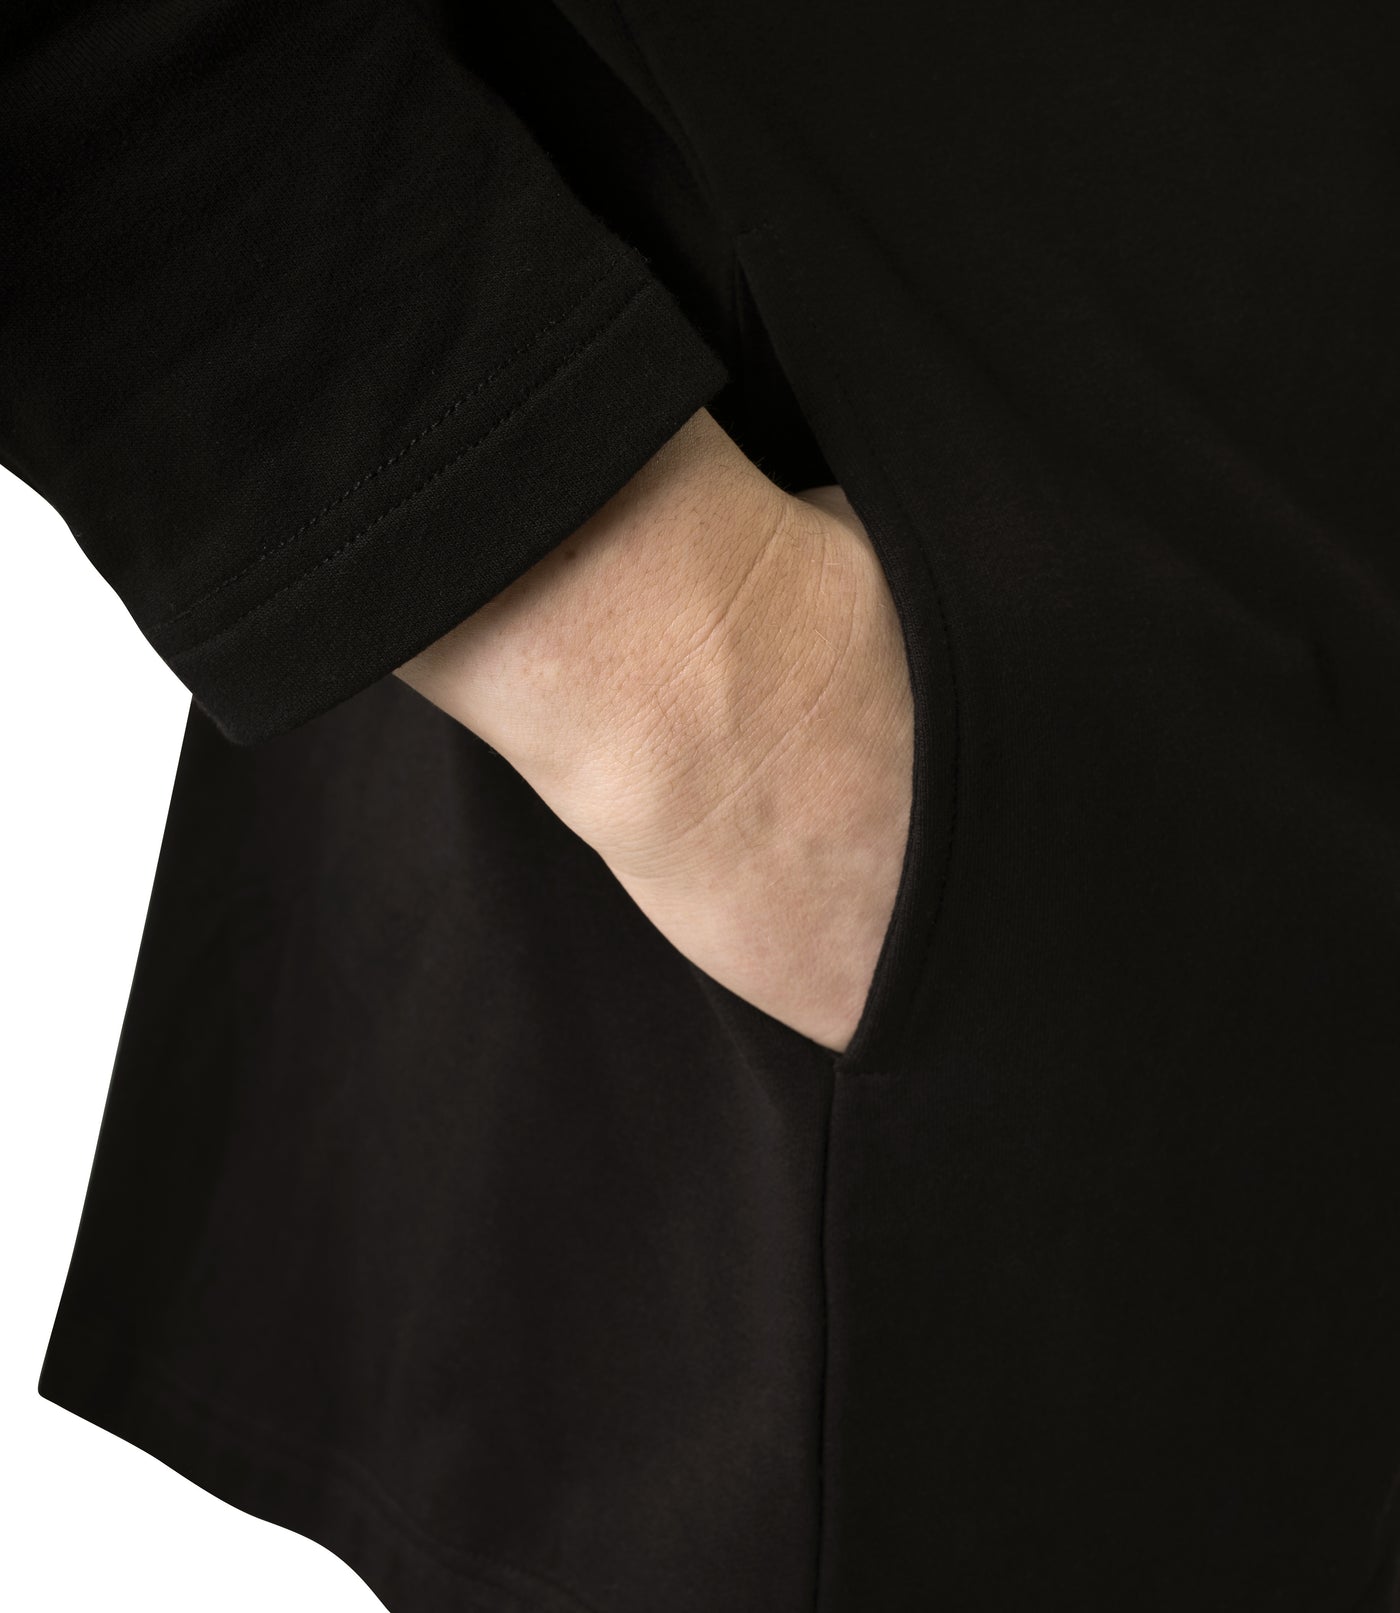 Plus-size model, facing backward, wearing JunoActive's Mavie Cotton Wrap Jacket in color black. Close up of hand in pocket.